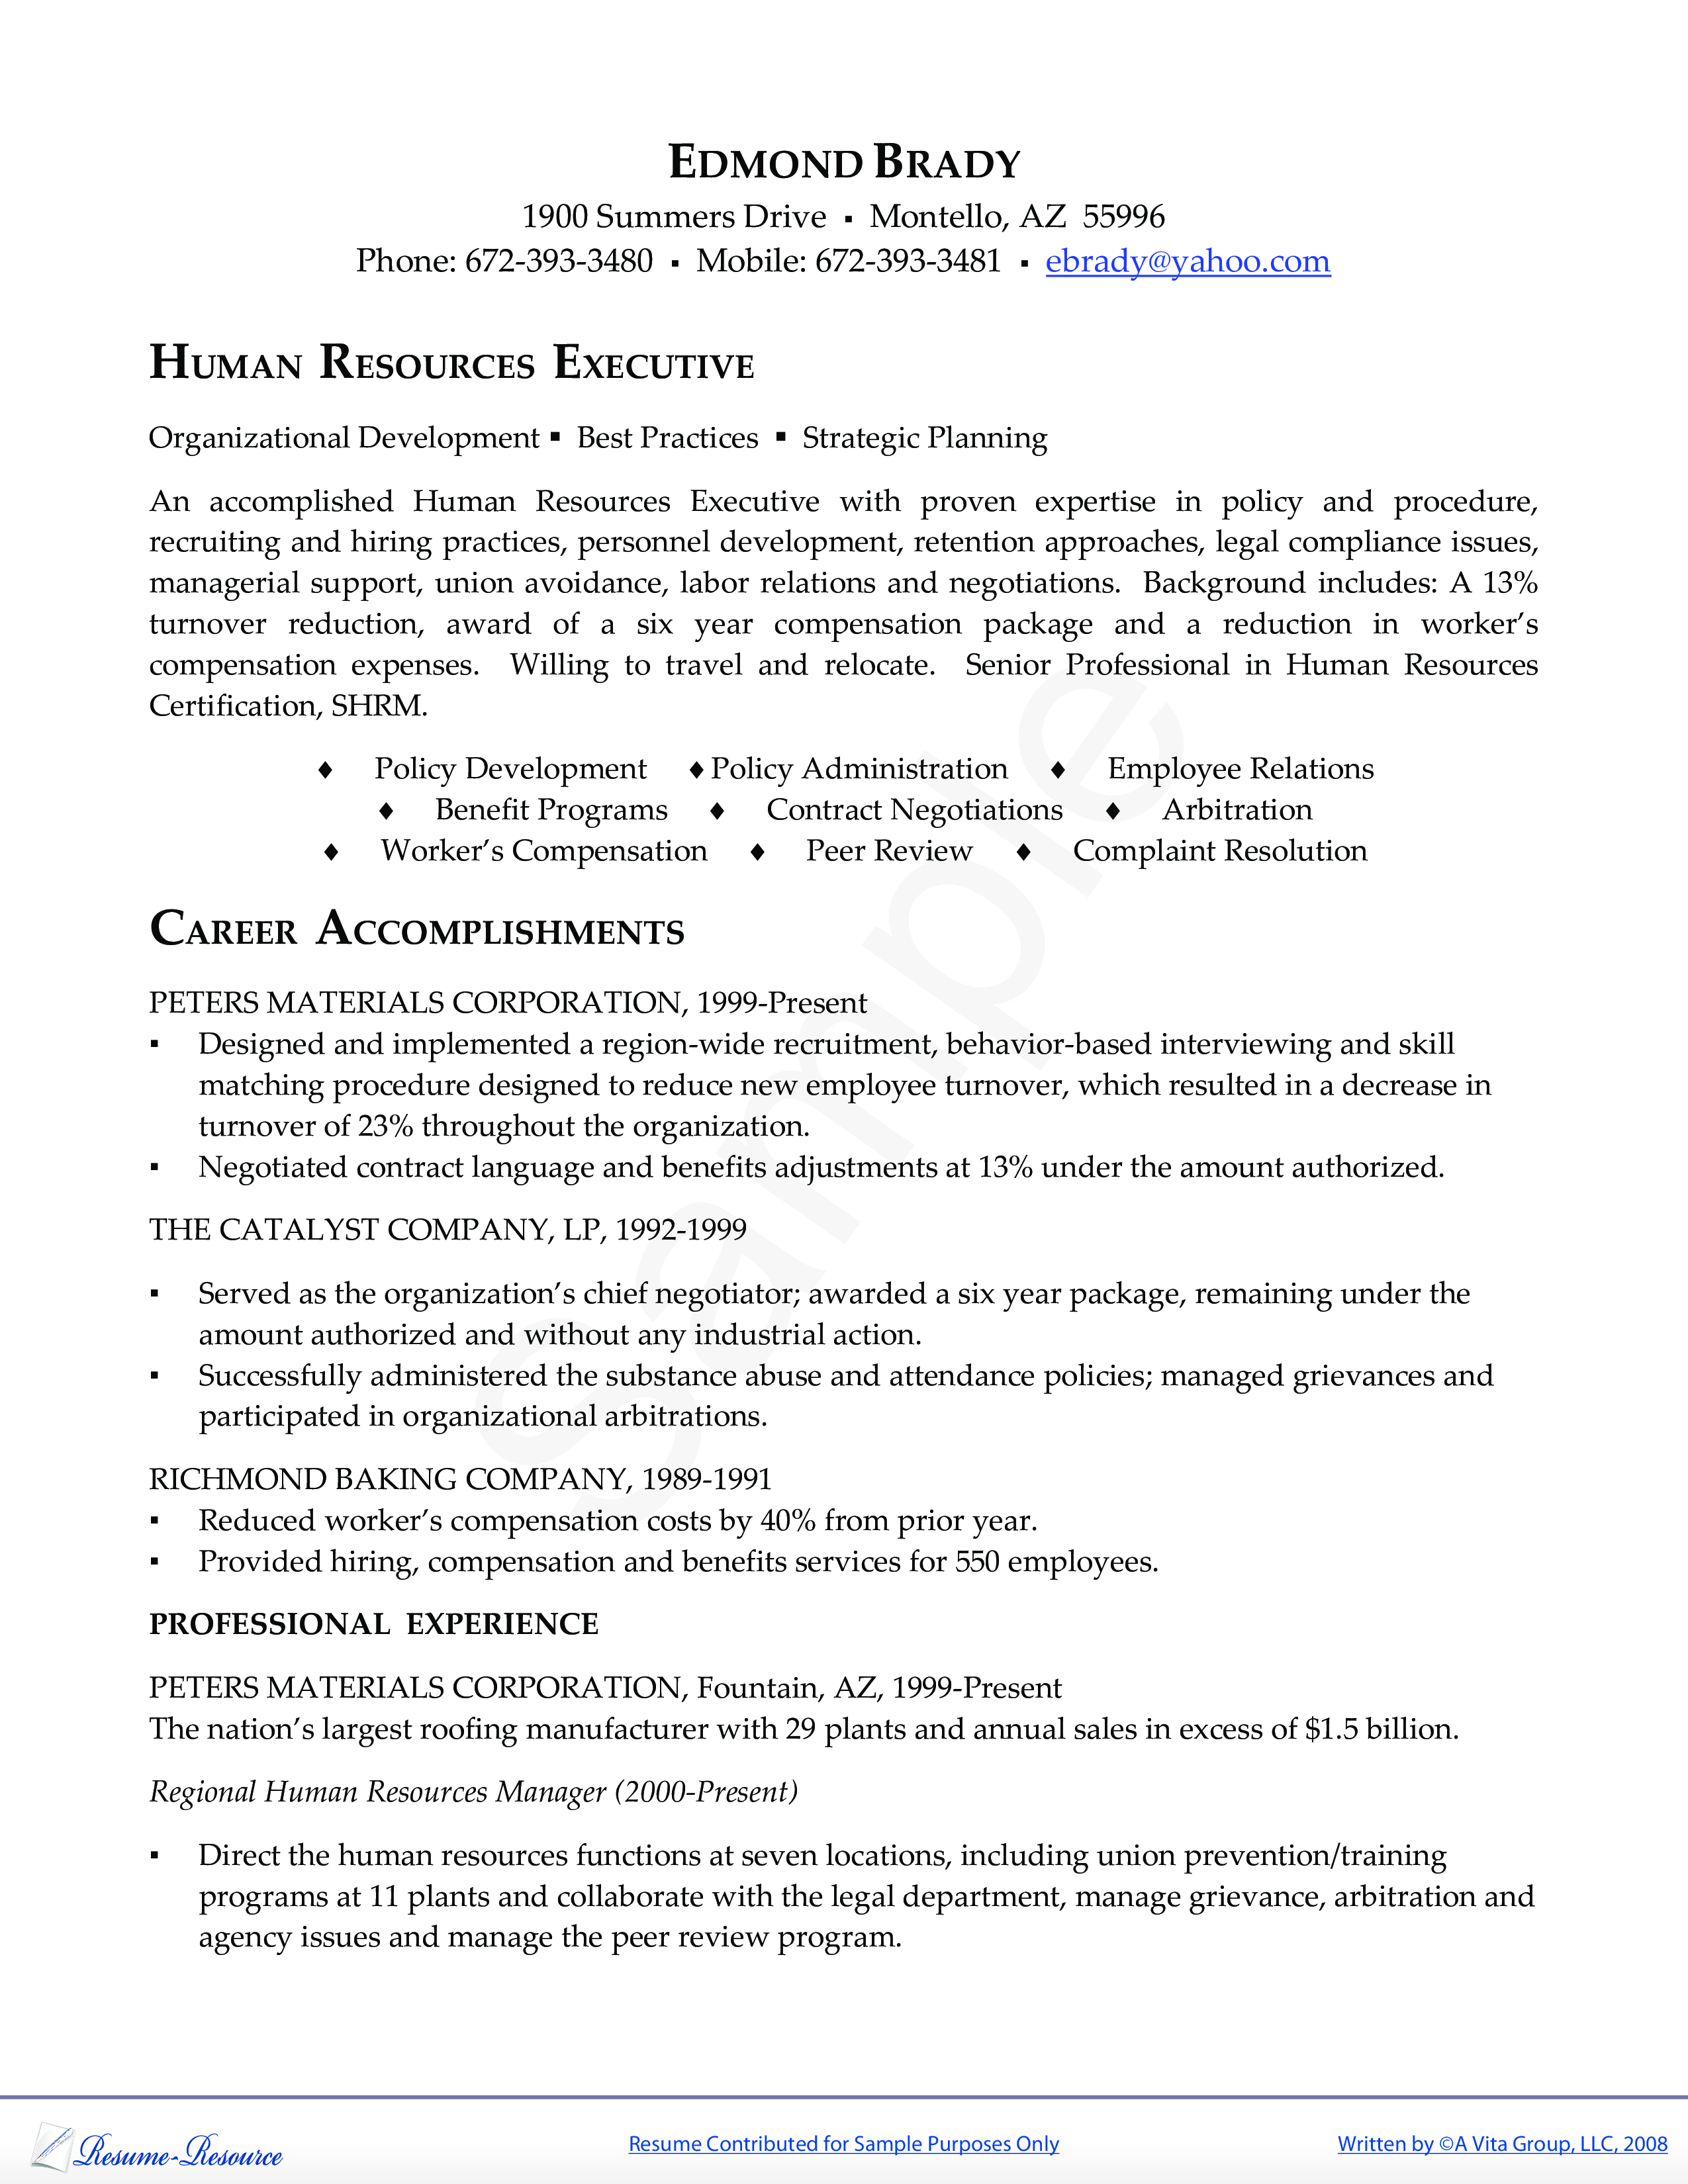 Human Resource Executive Resume 模板